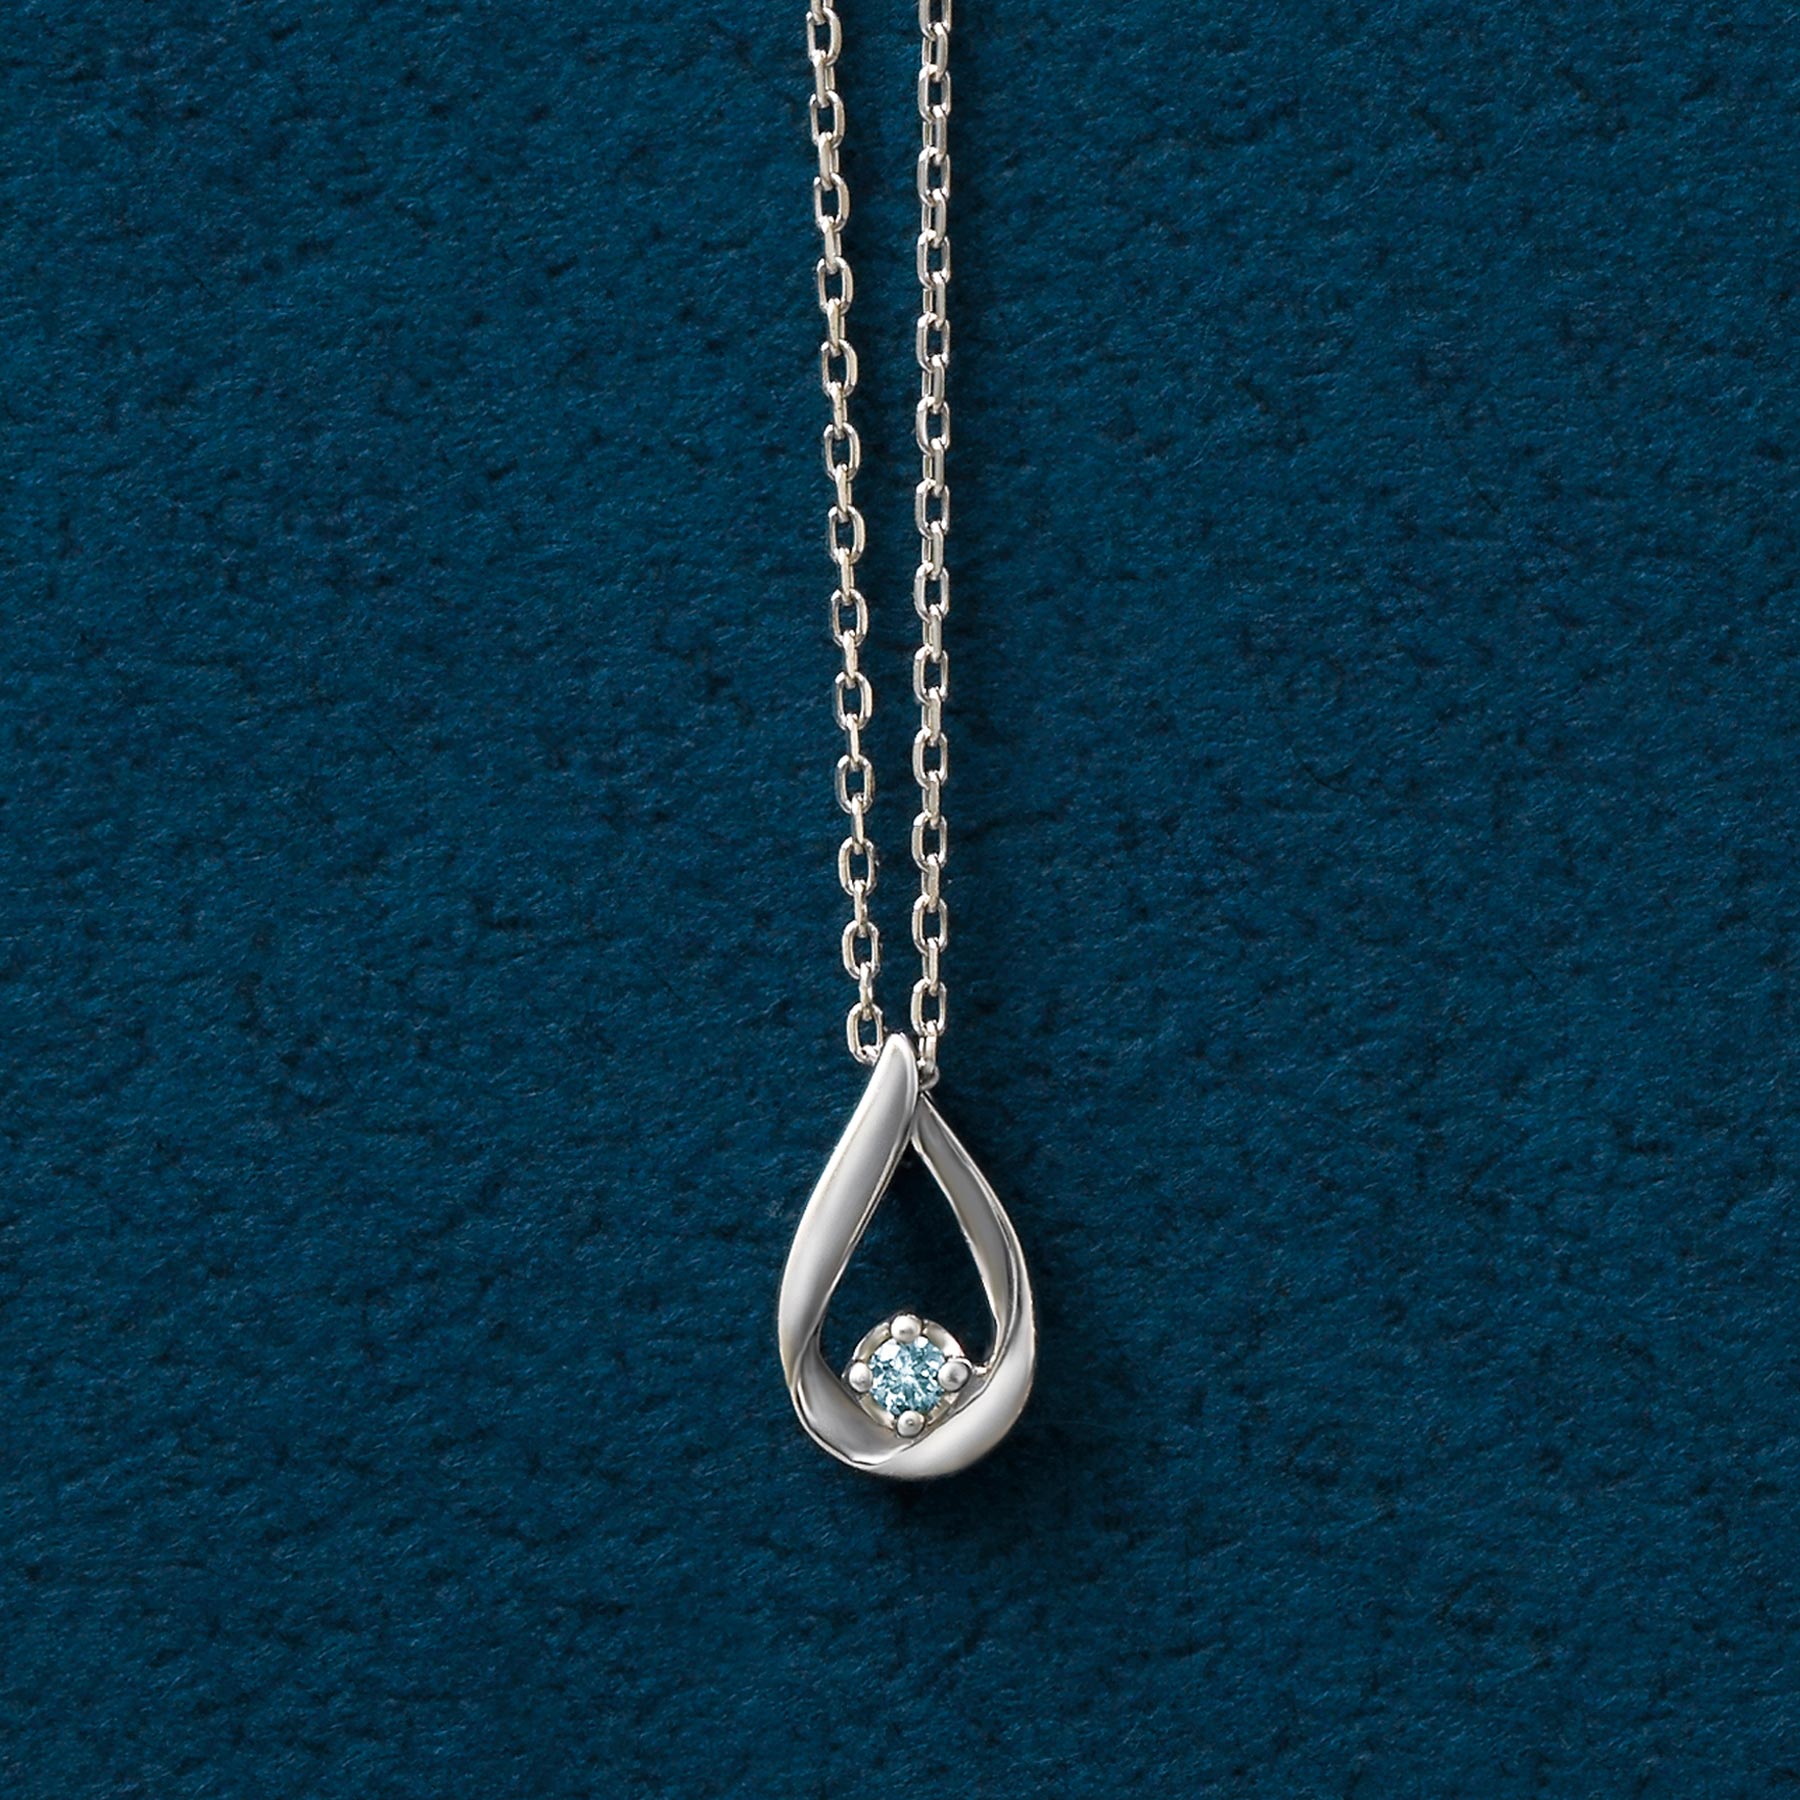 10K White Gold Diamond Dew Drop Necklace - Product Image